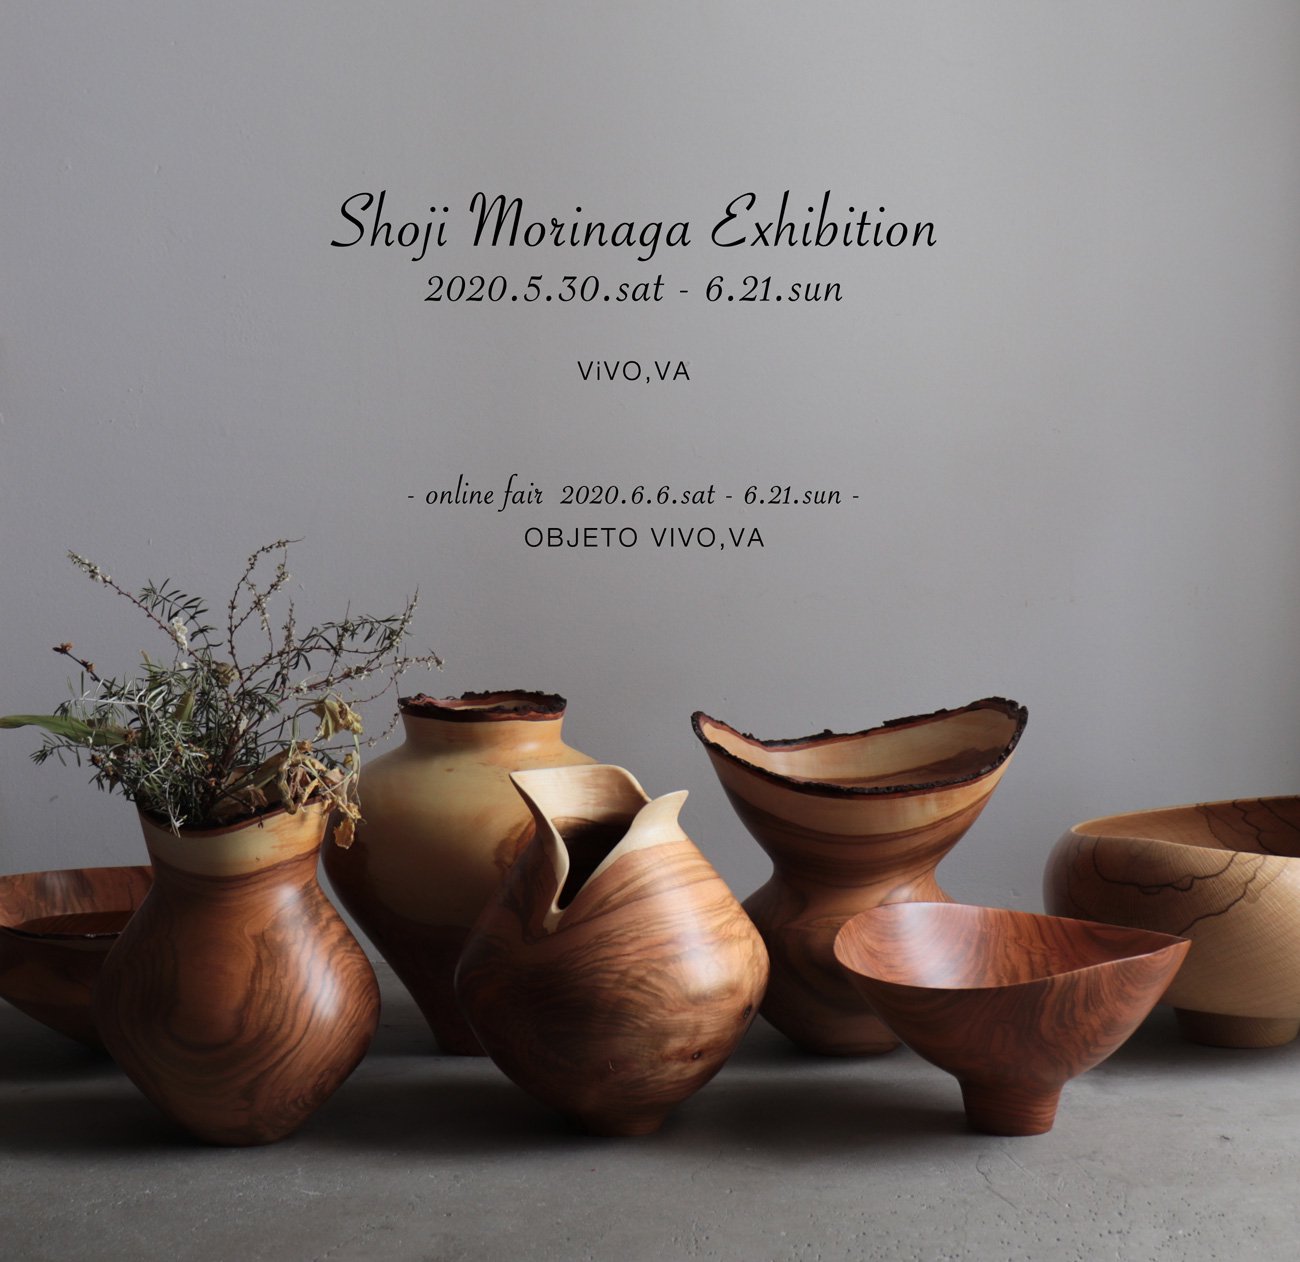 Shoji Morinaga Exhibition 2020.5.30 - 6.14 - ViVO,VA online market